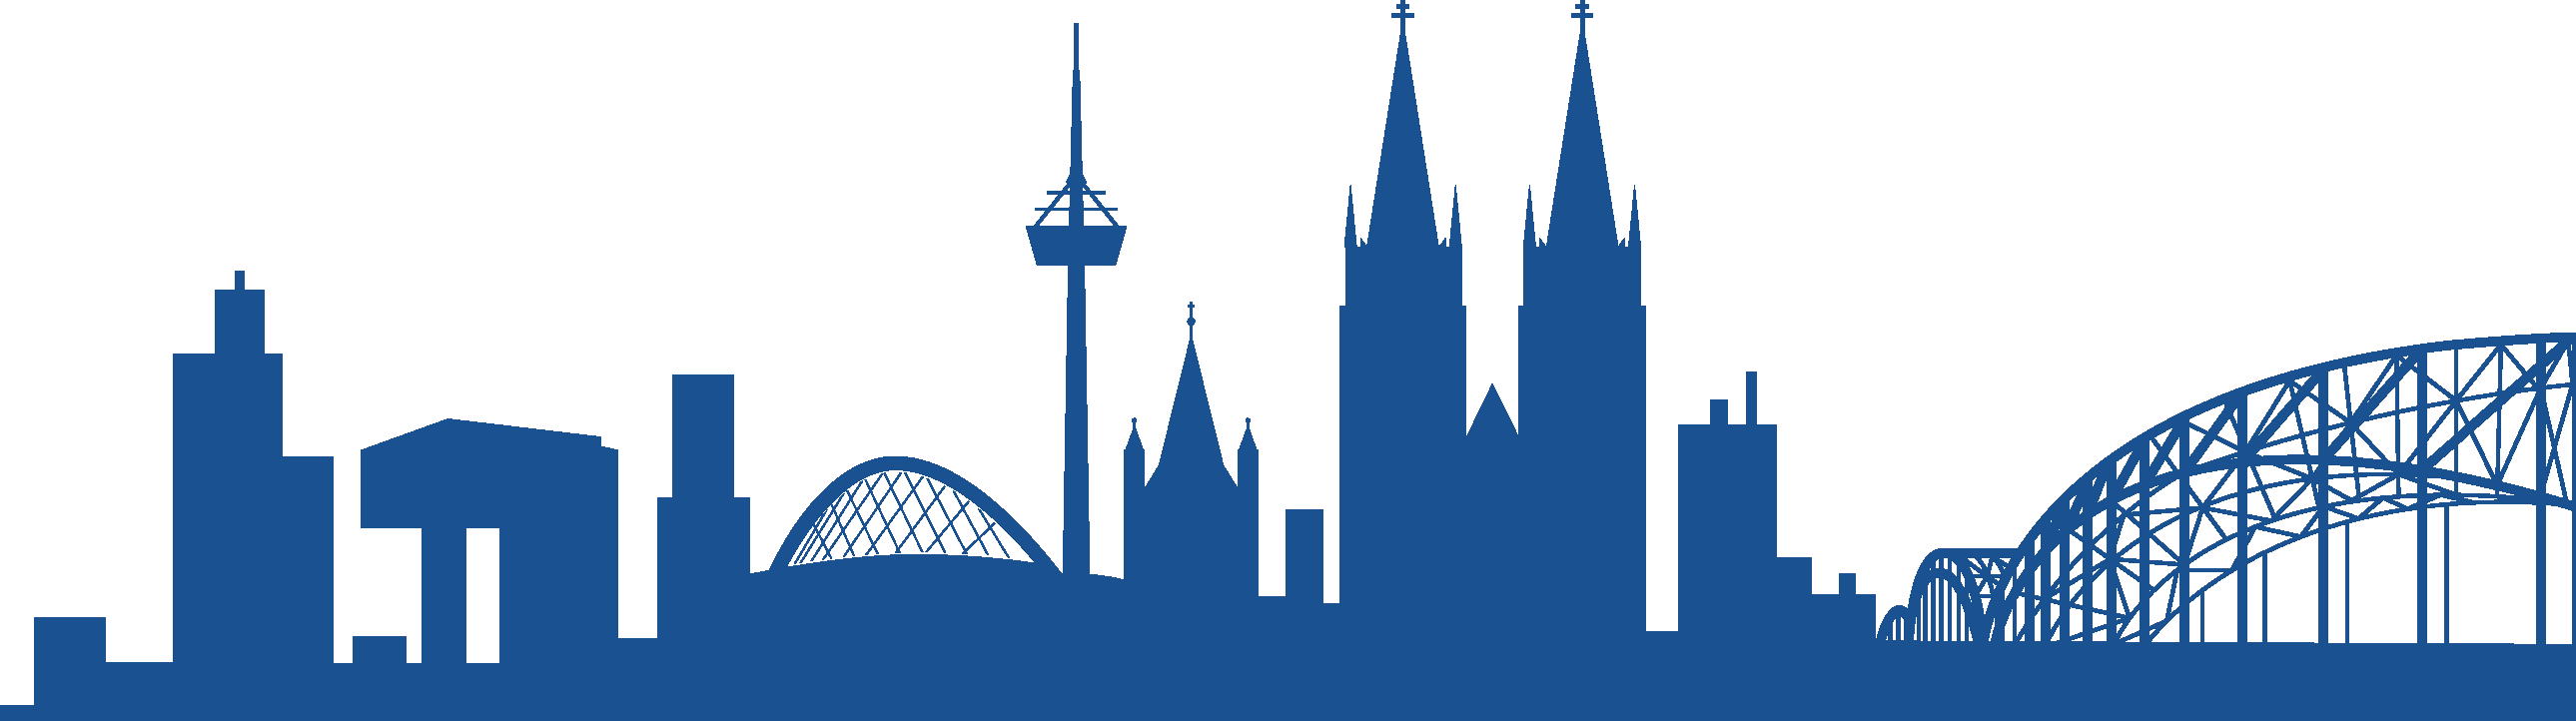 Kölner Skyline mit Kölner Dom im Zentrum